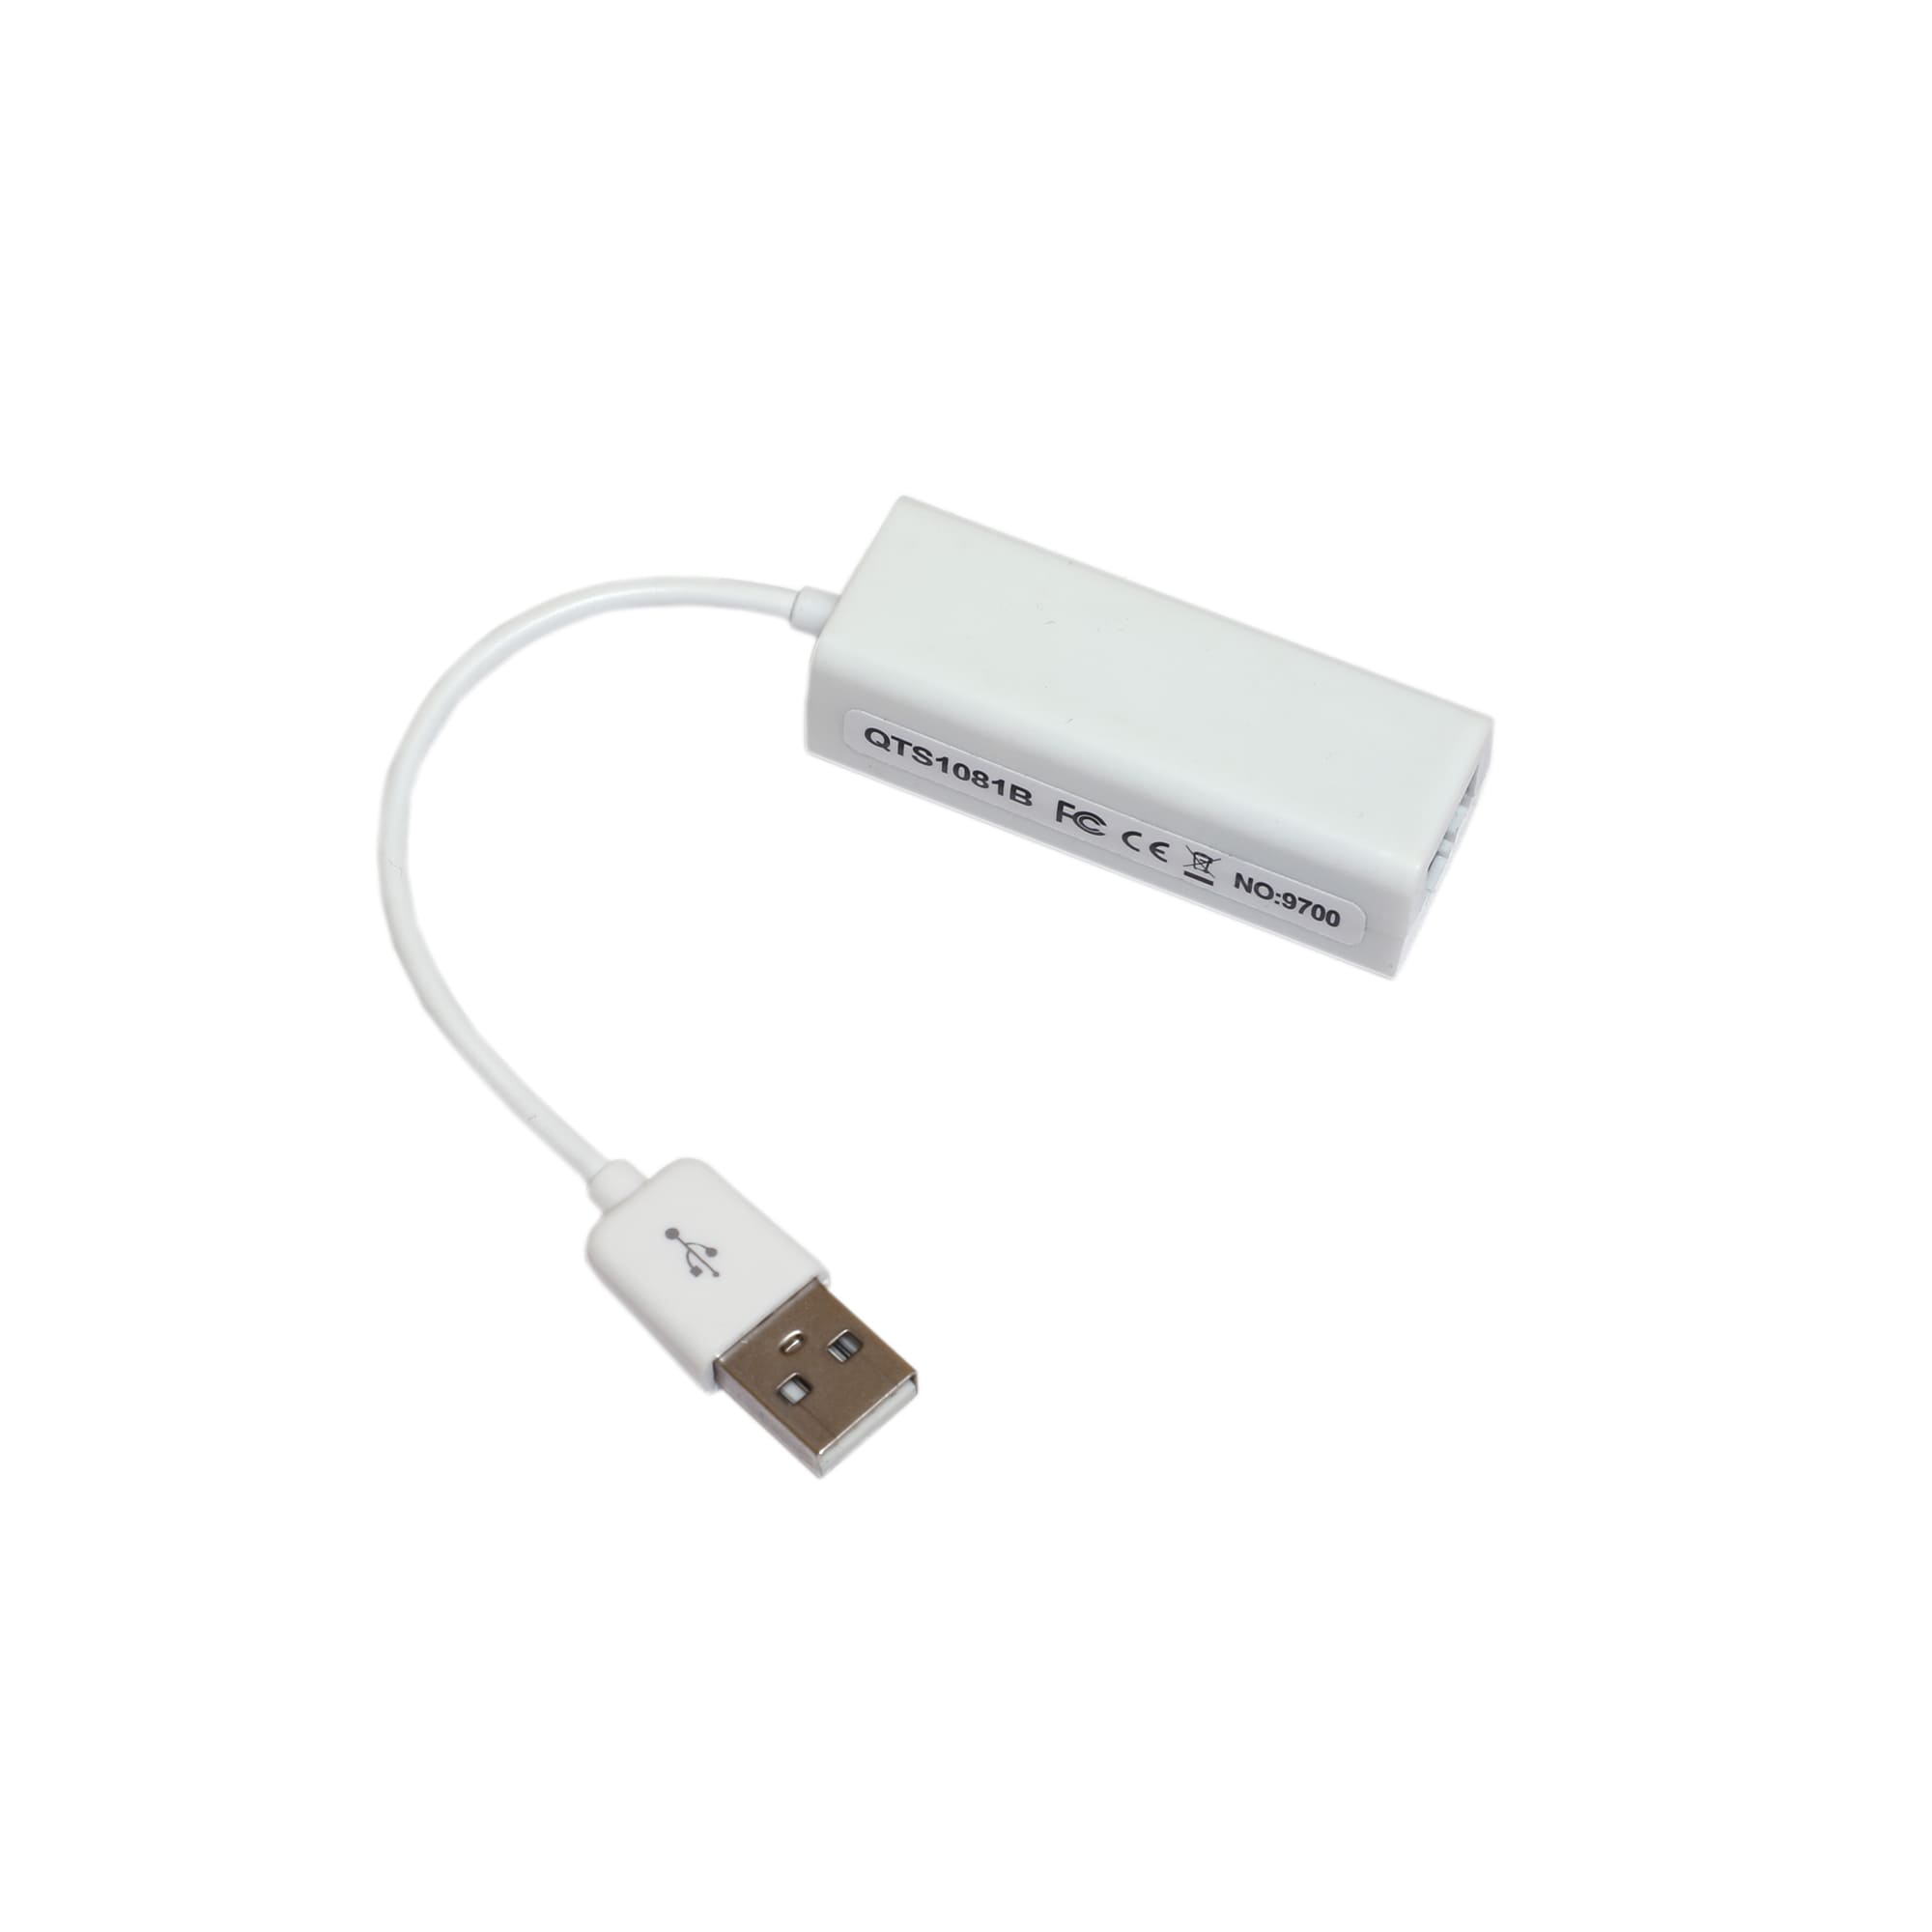 ADAPTATEUR USB TO RJ45 NO:9700